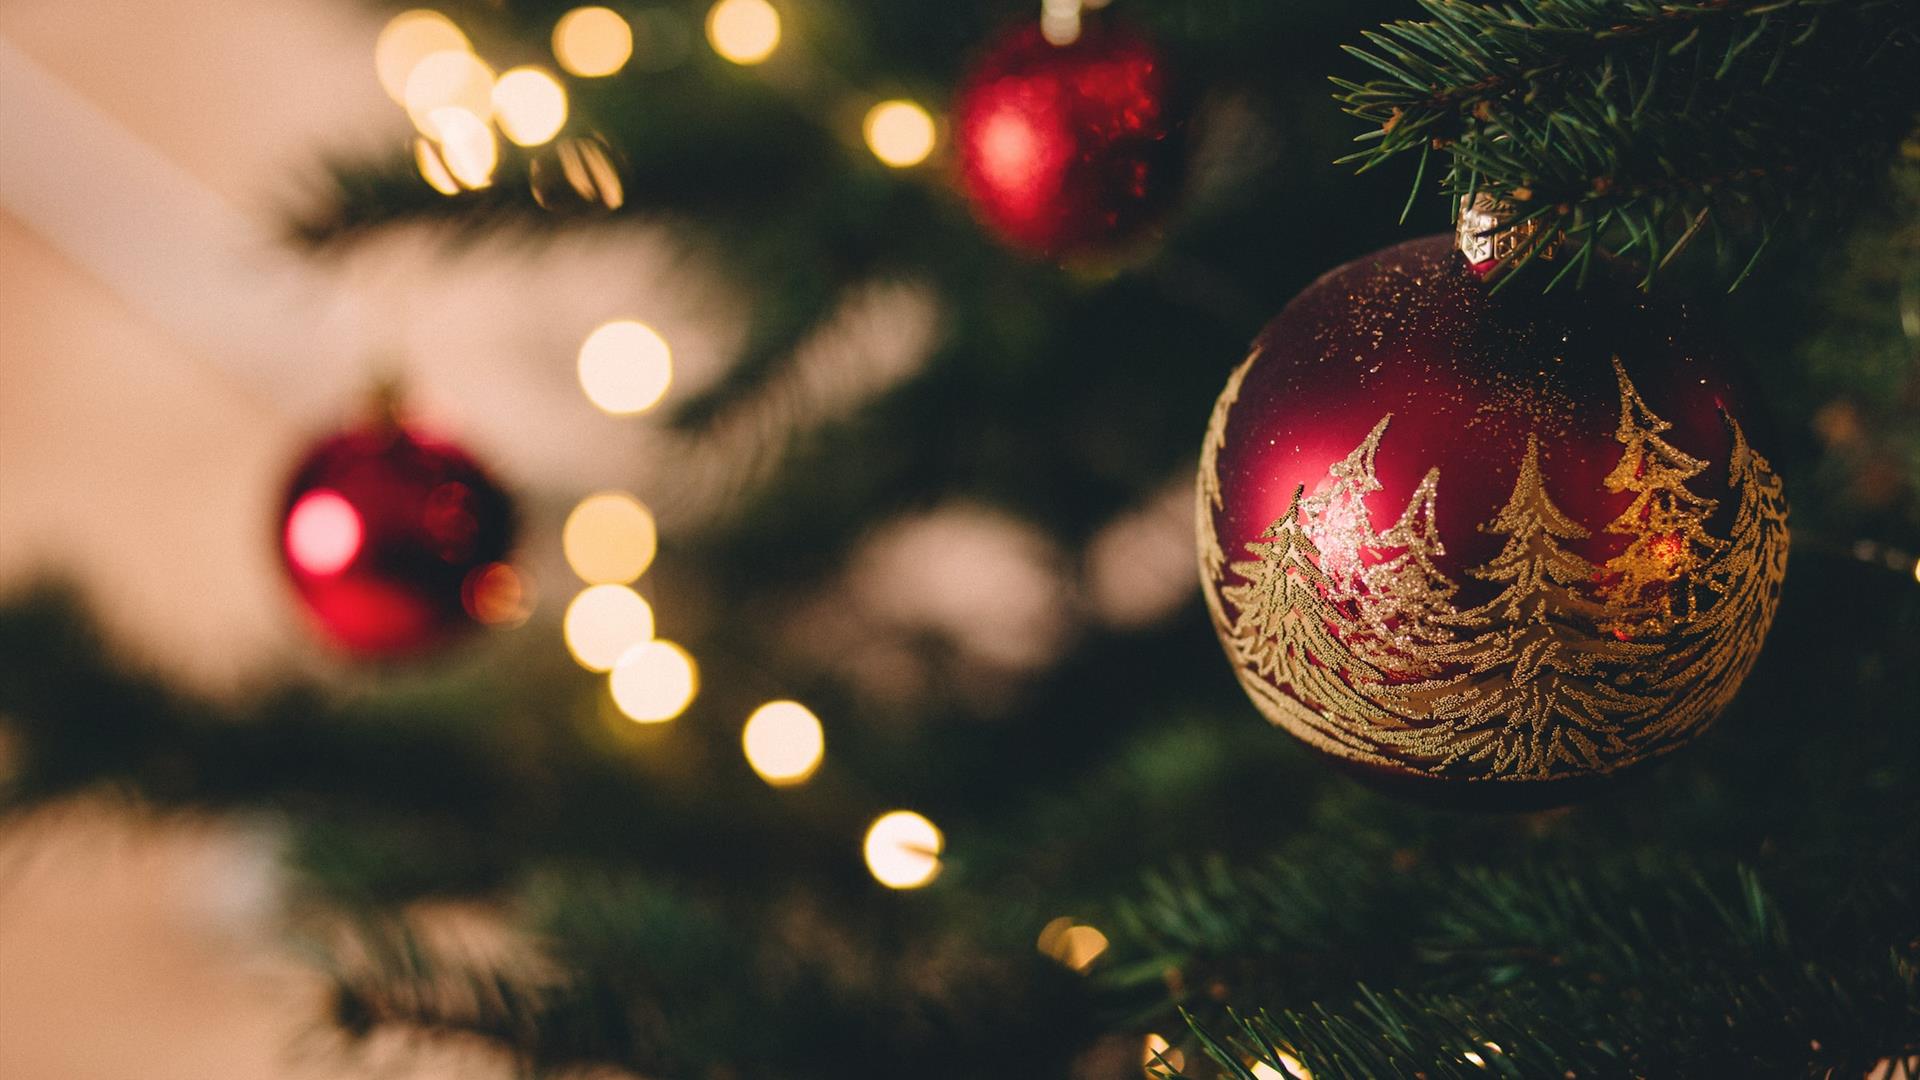 Bauble on Christmas Tree from Freestocks Unsplash